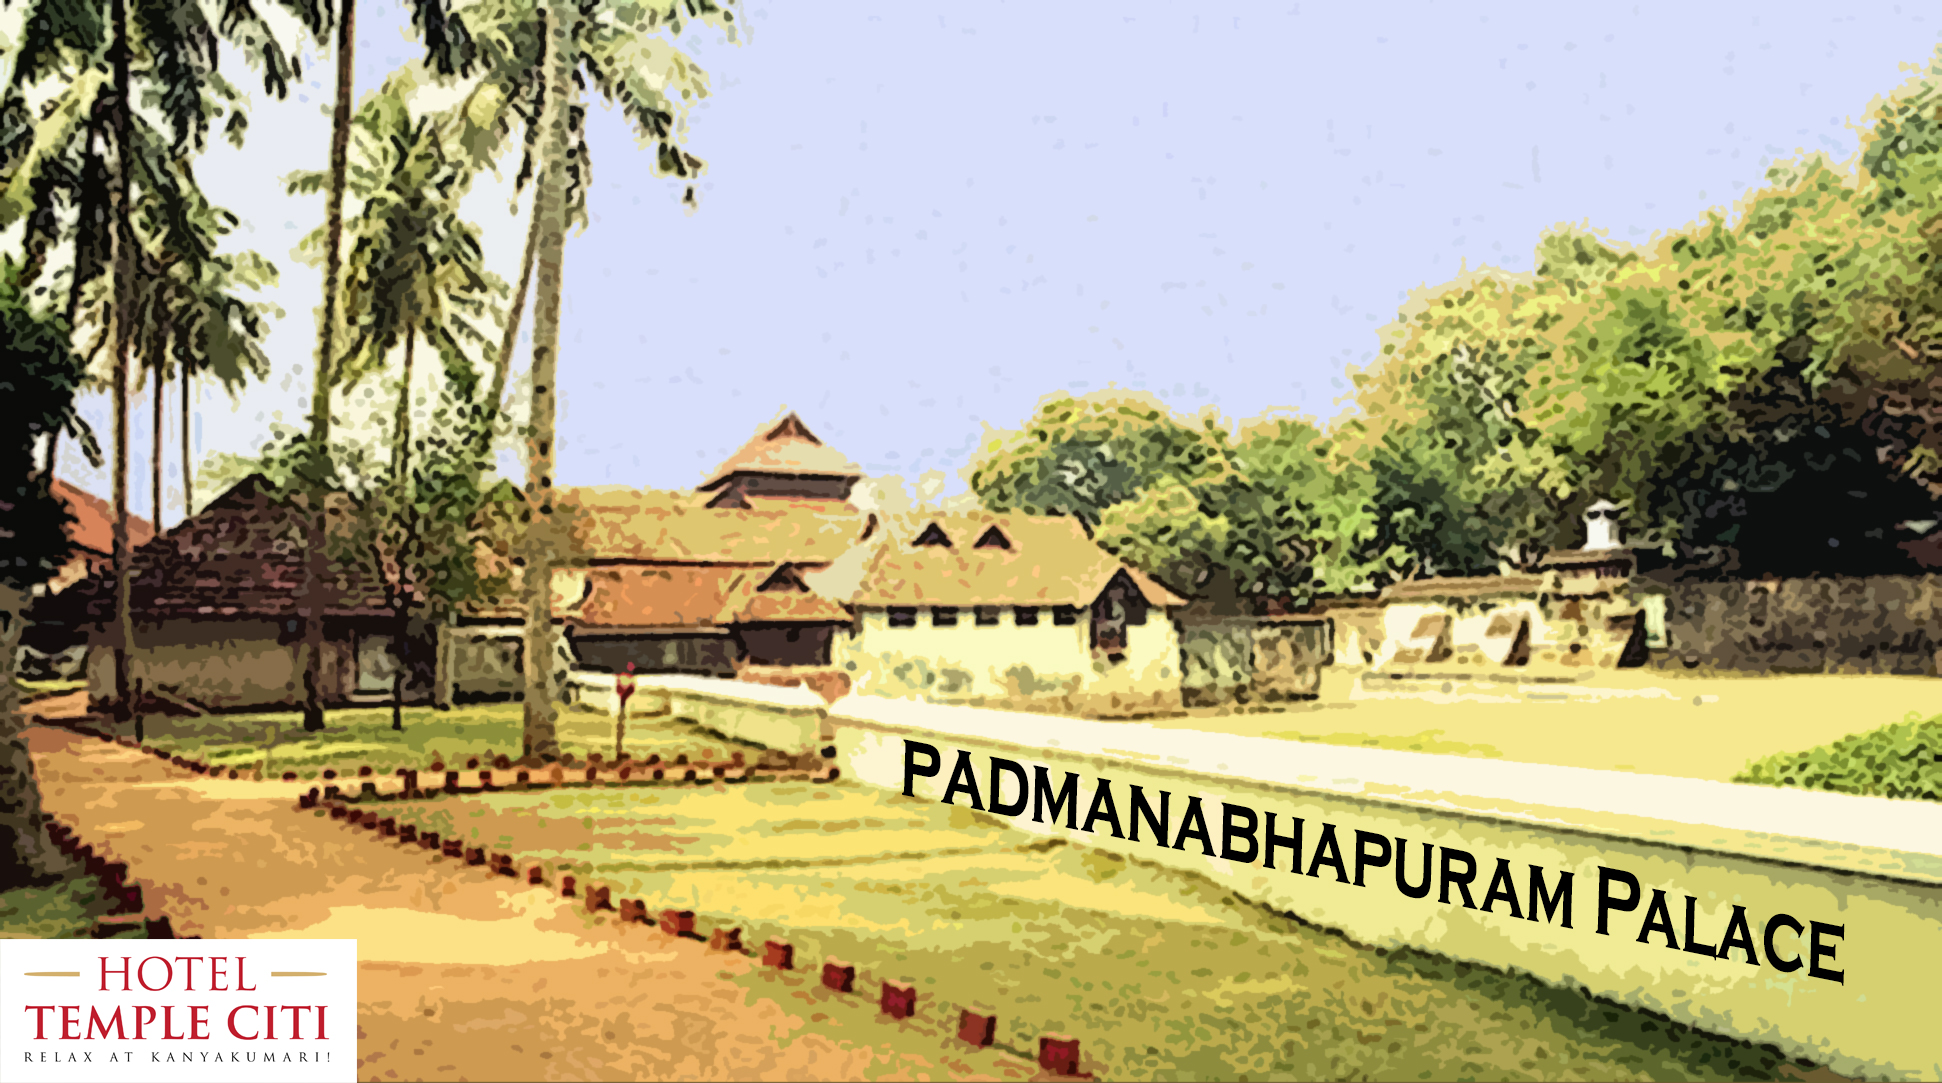 Padmanabhapuram palace – a wonder in Every way